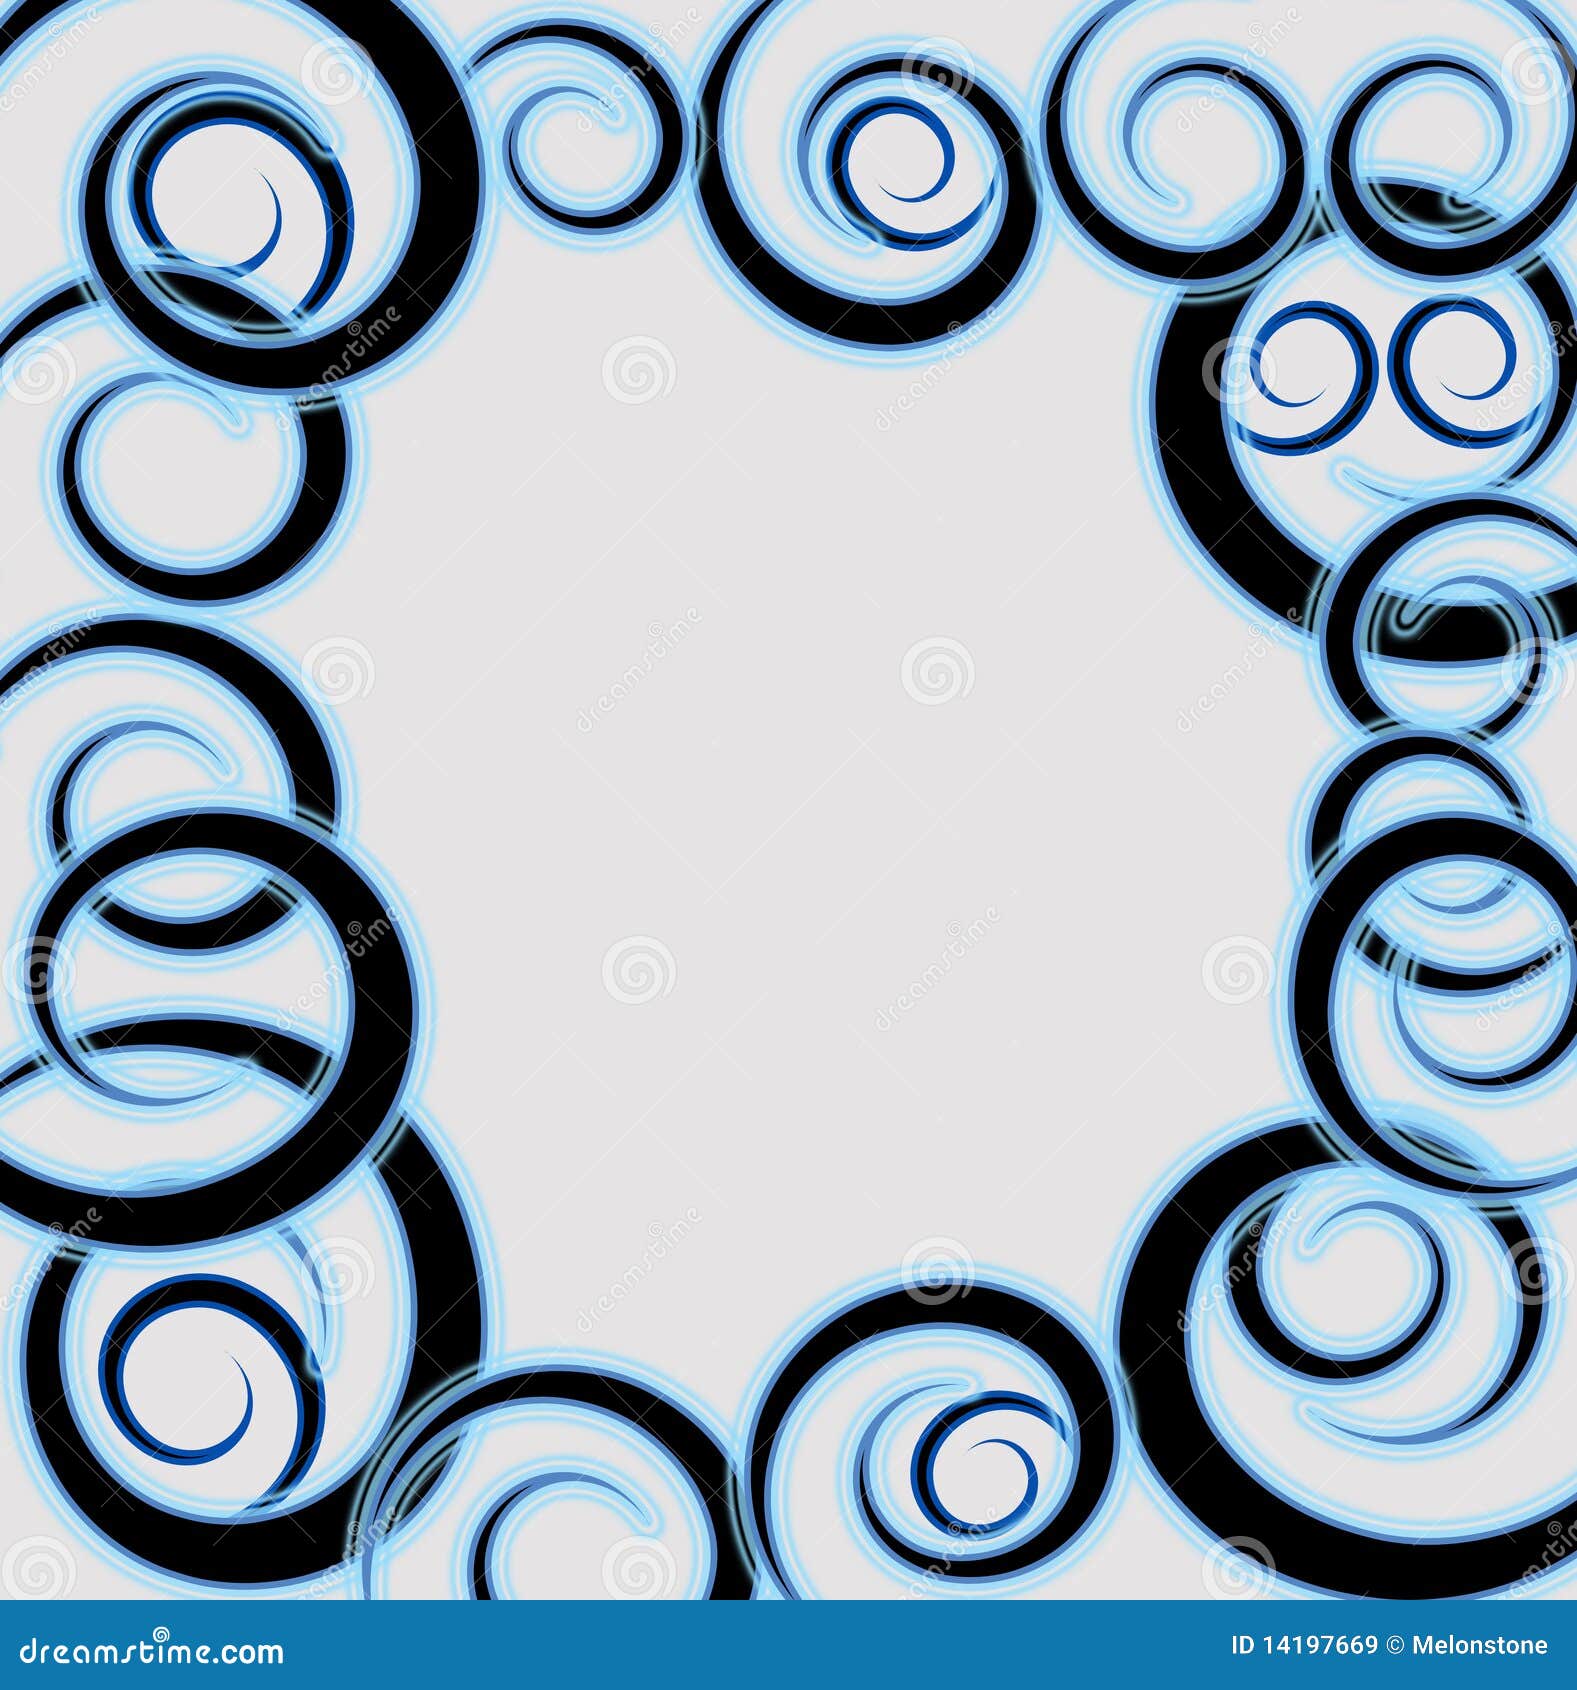 spirals frame border